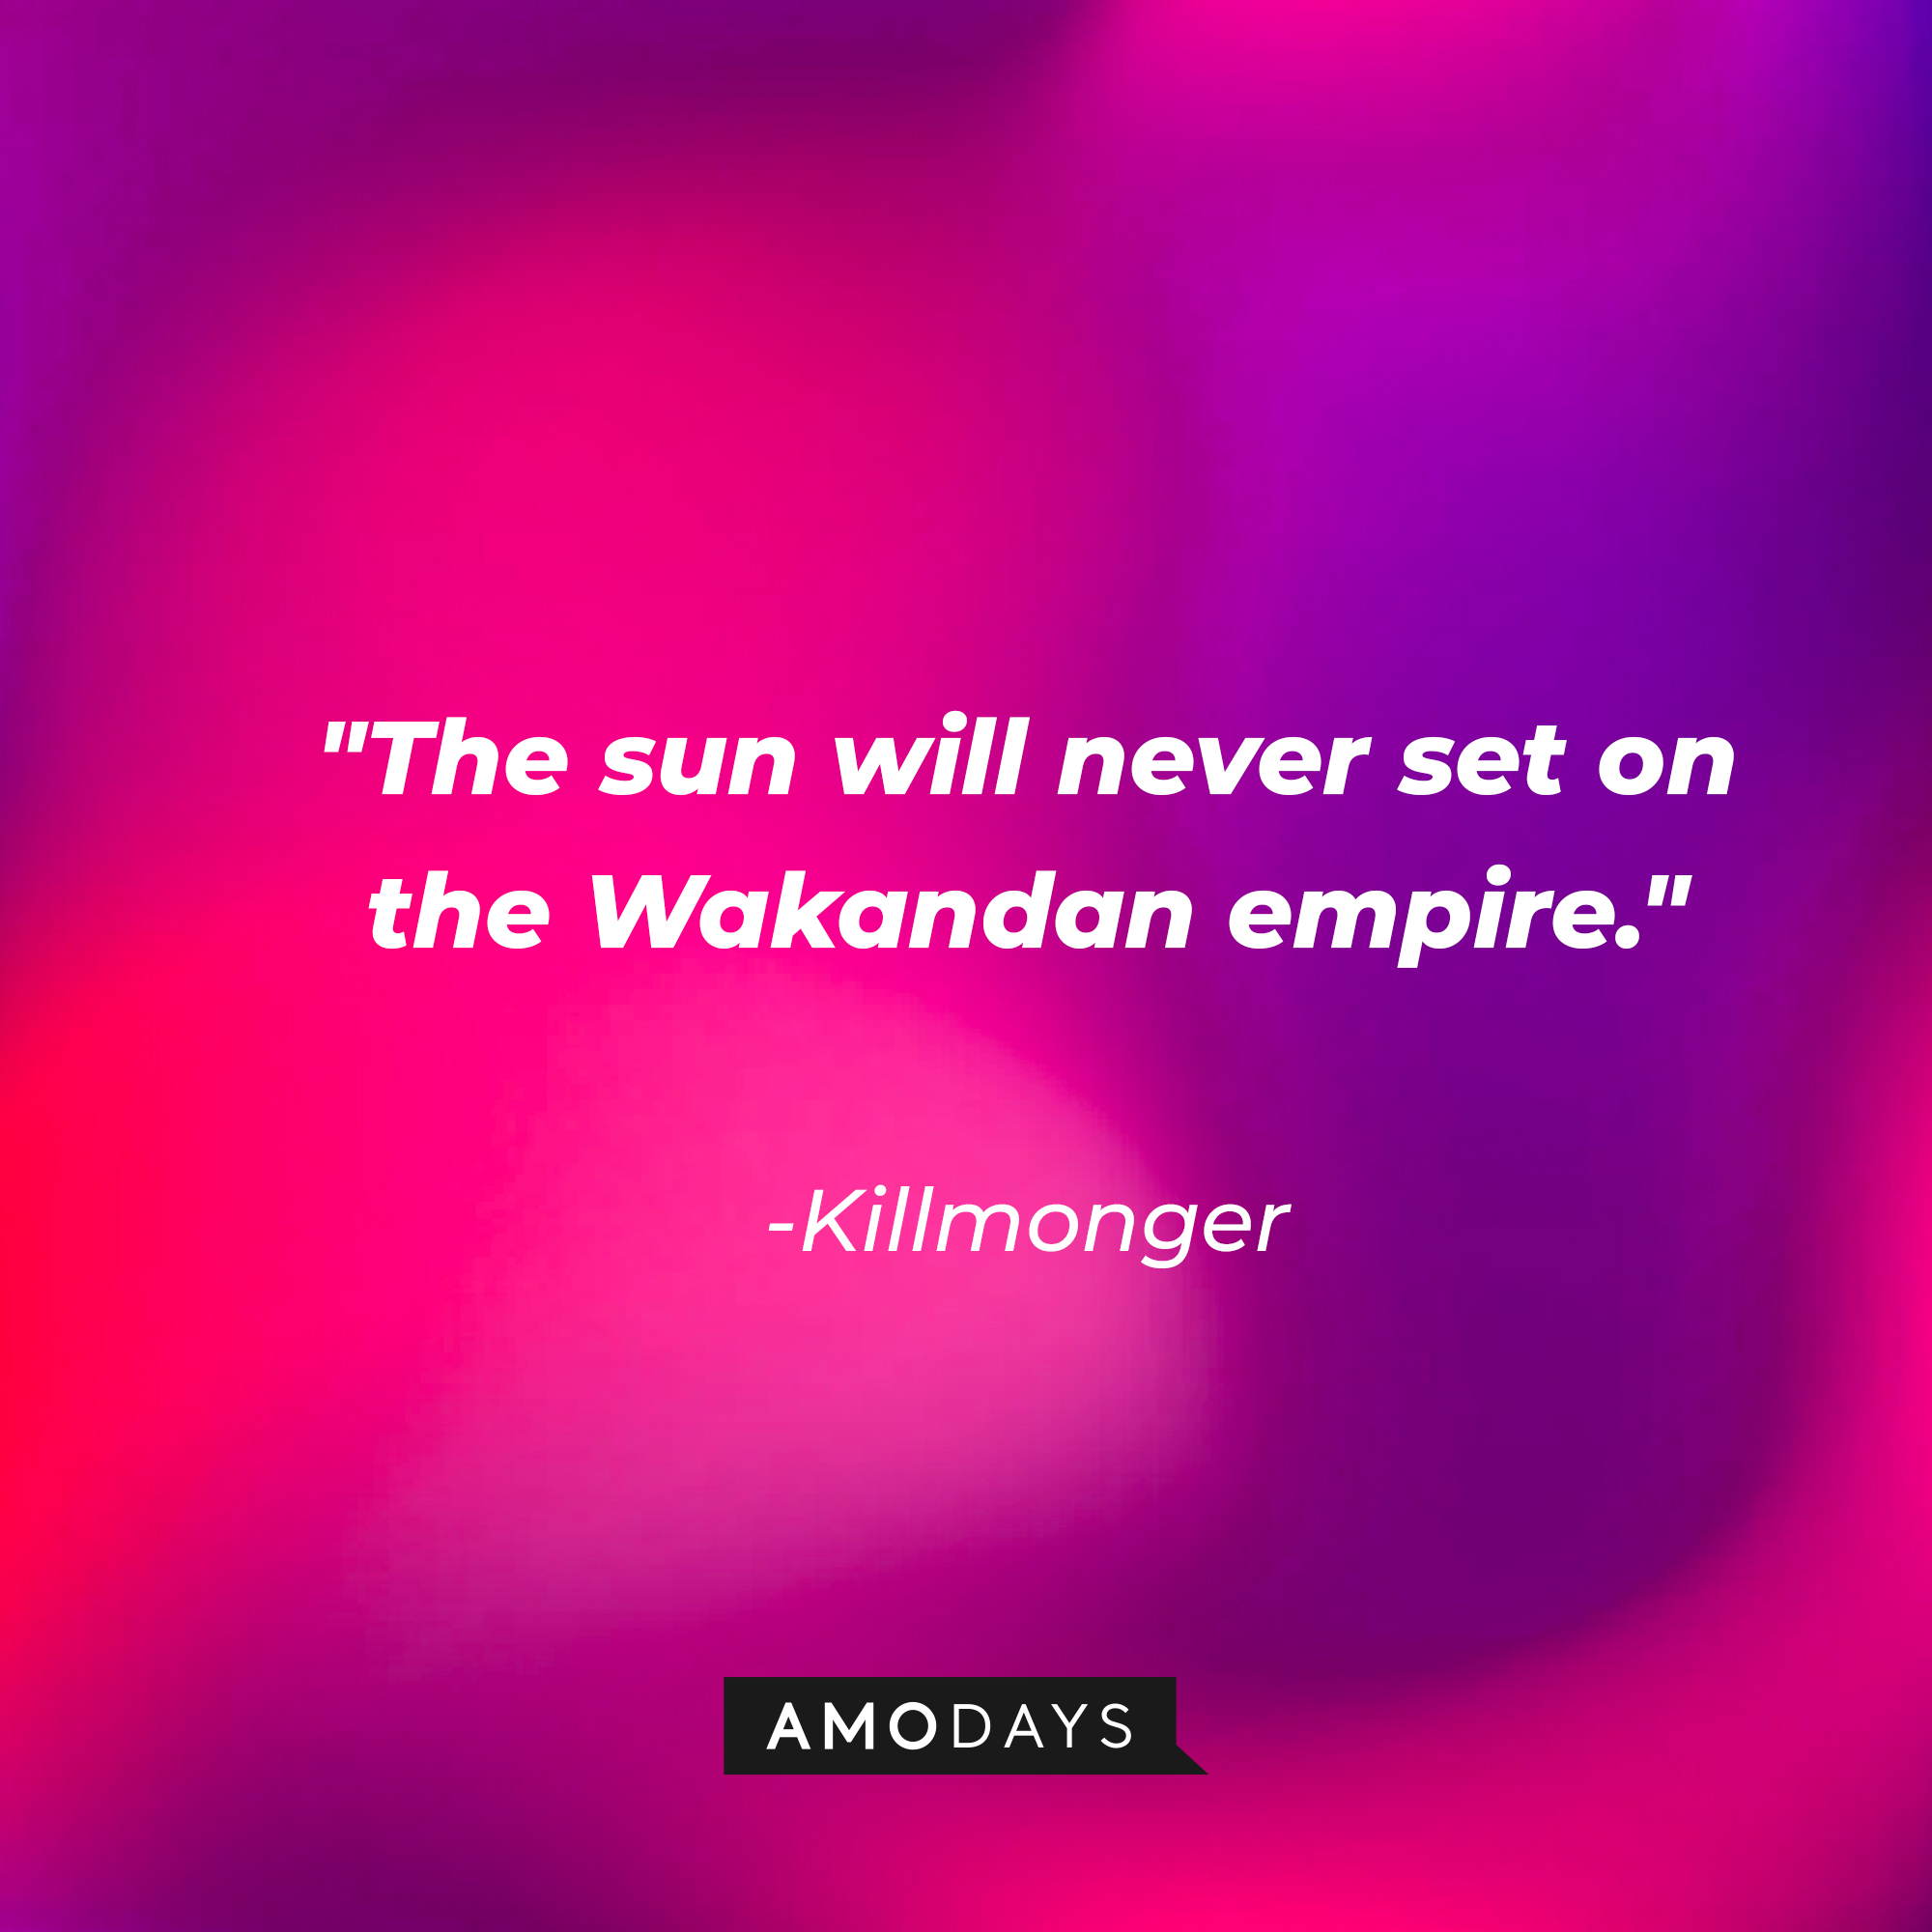 Killmonger's quote: "The sun will never set on the Wakandan empire." | Source: AmoDays